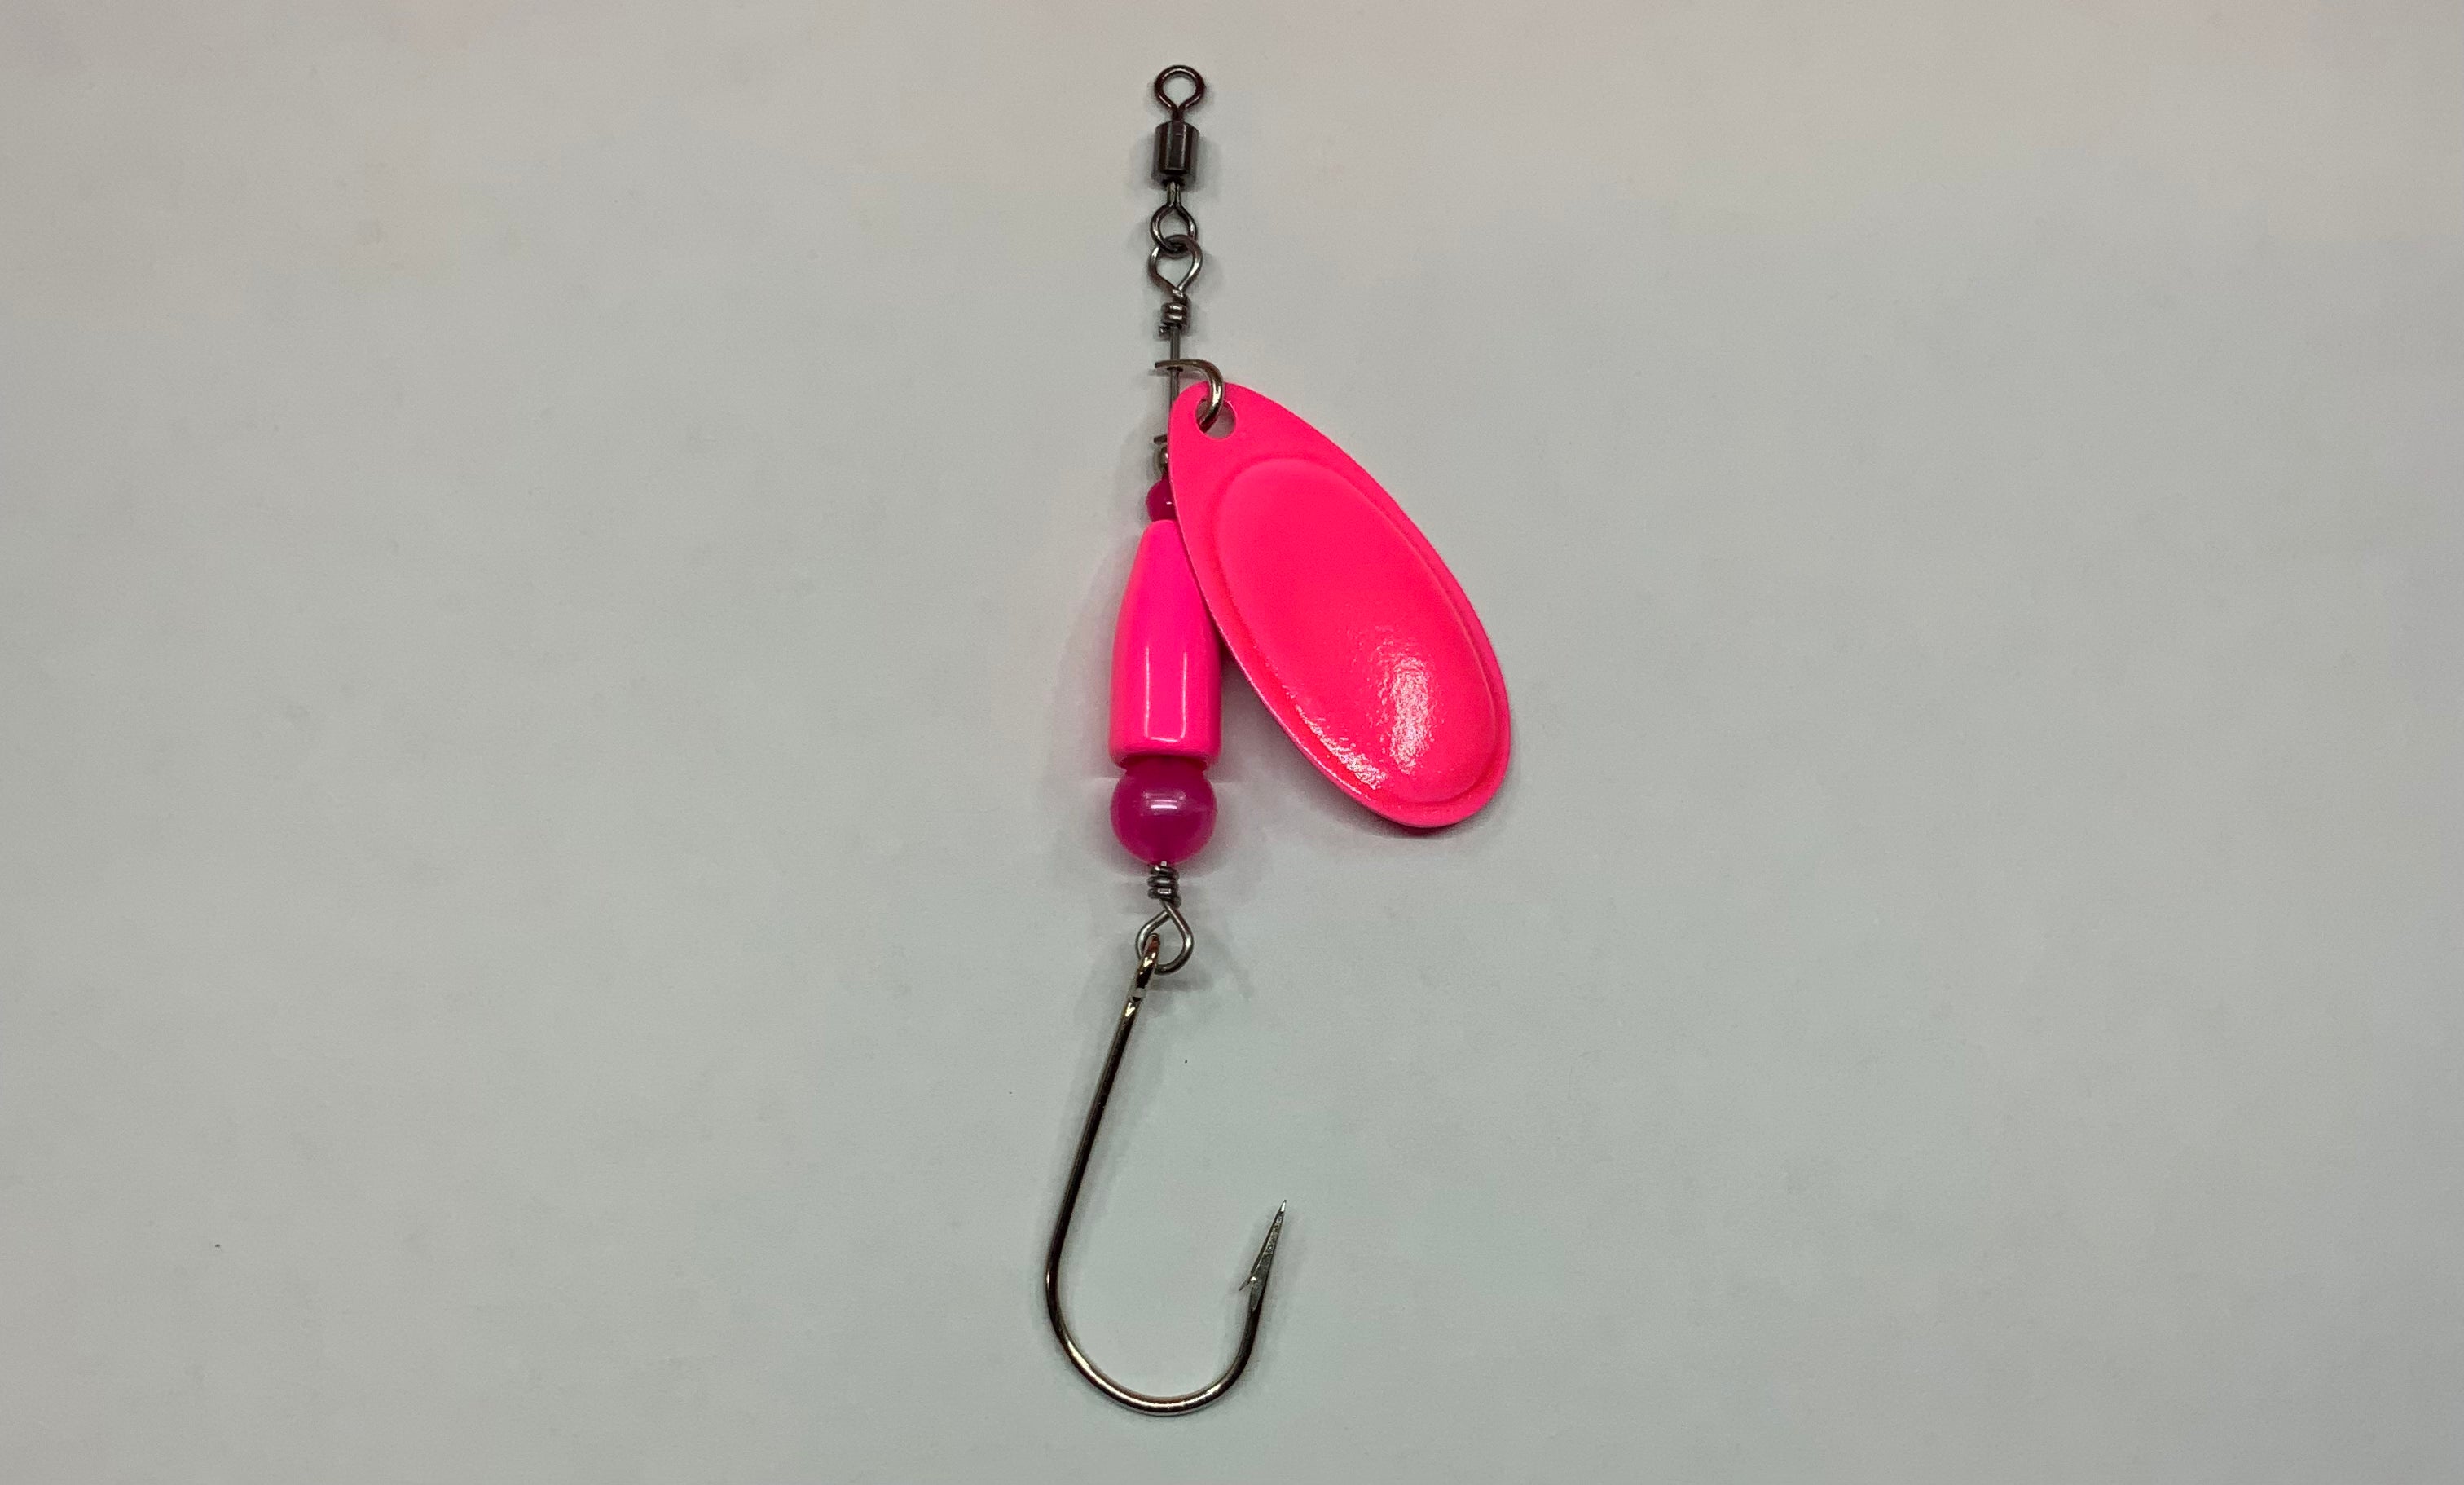 PLAT/clearance sale jackall bigbacker spin 40g pink back-Fishing Tackle  Store-en